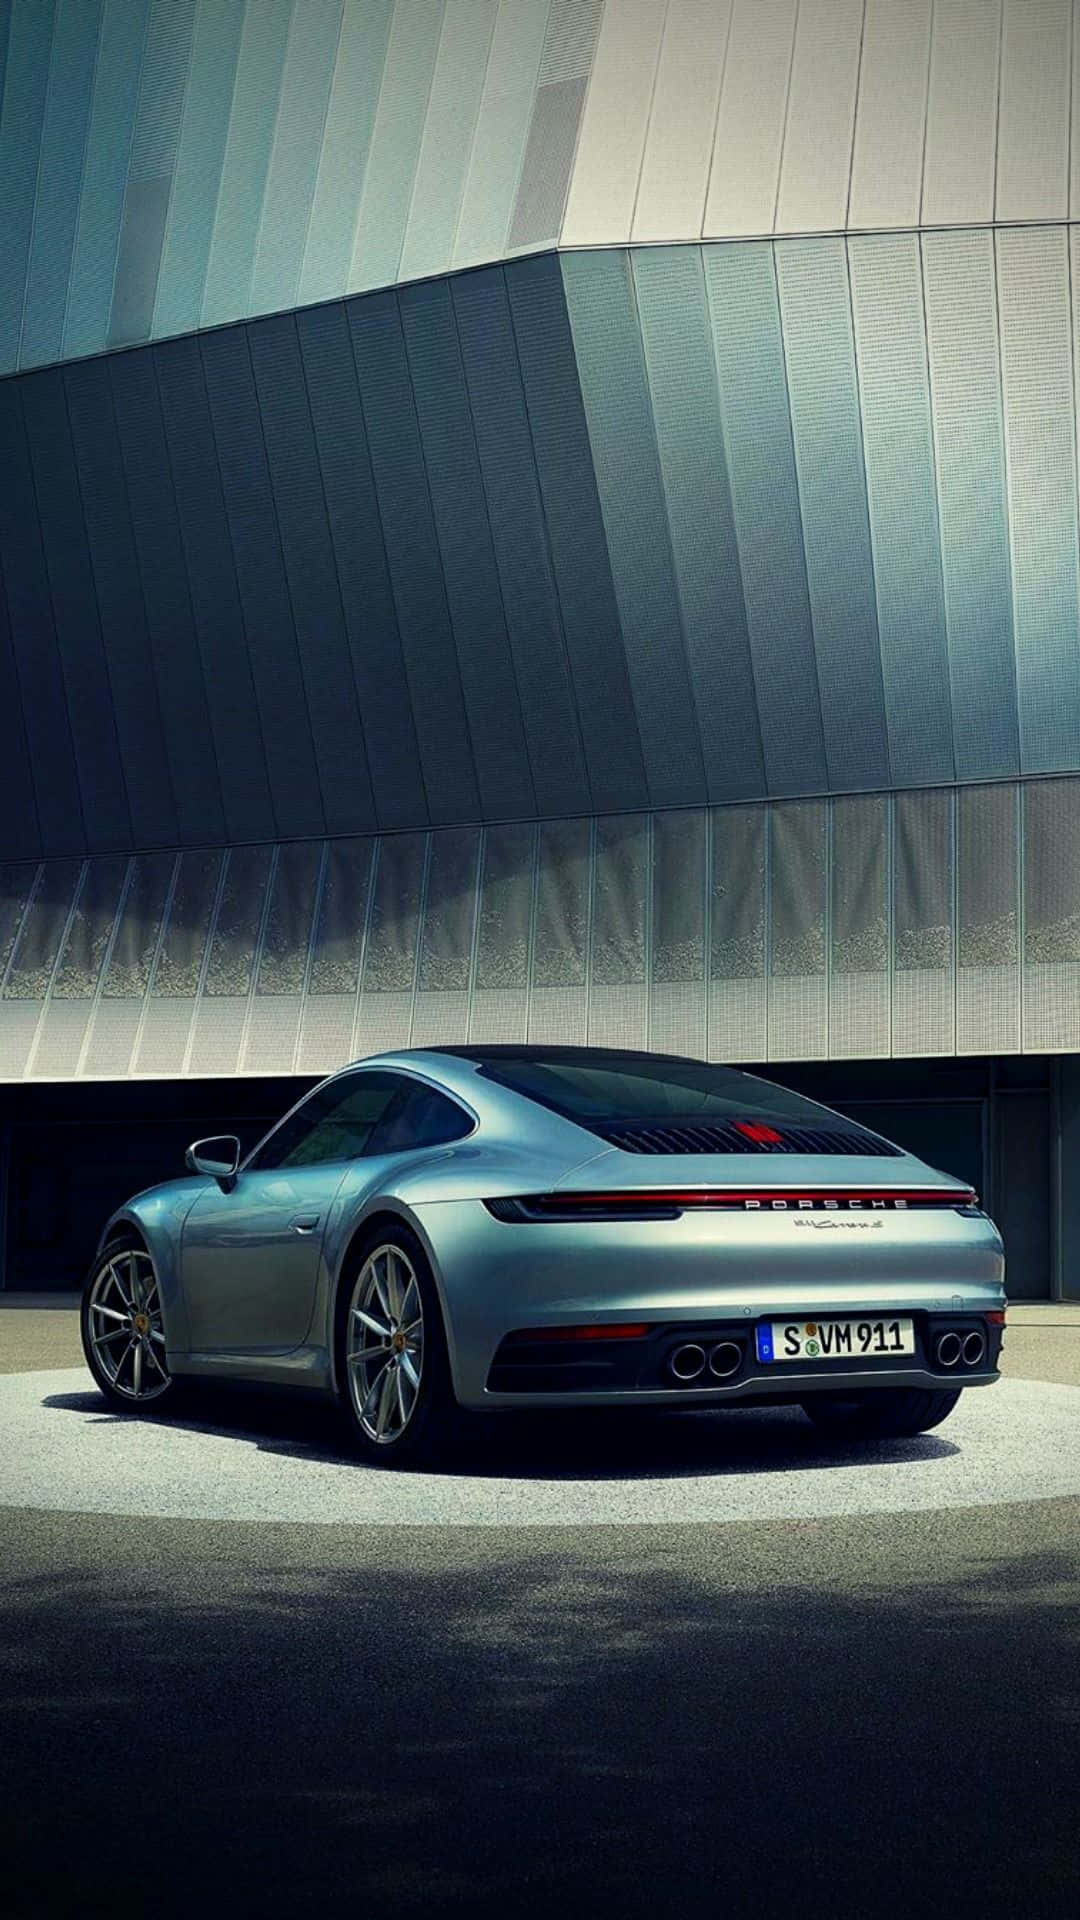 Captivating Porsche for iPhone Wallpaper Wallpaper